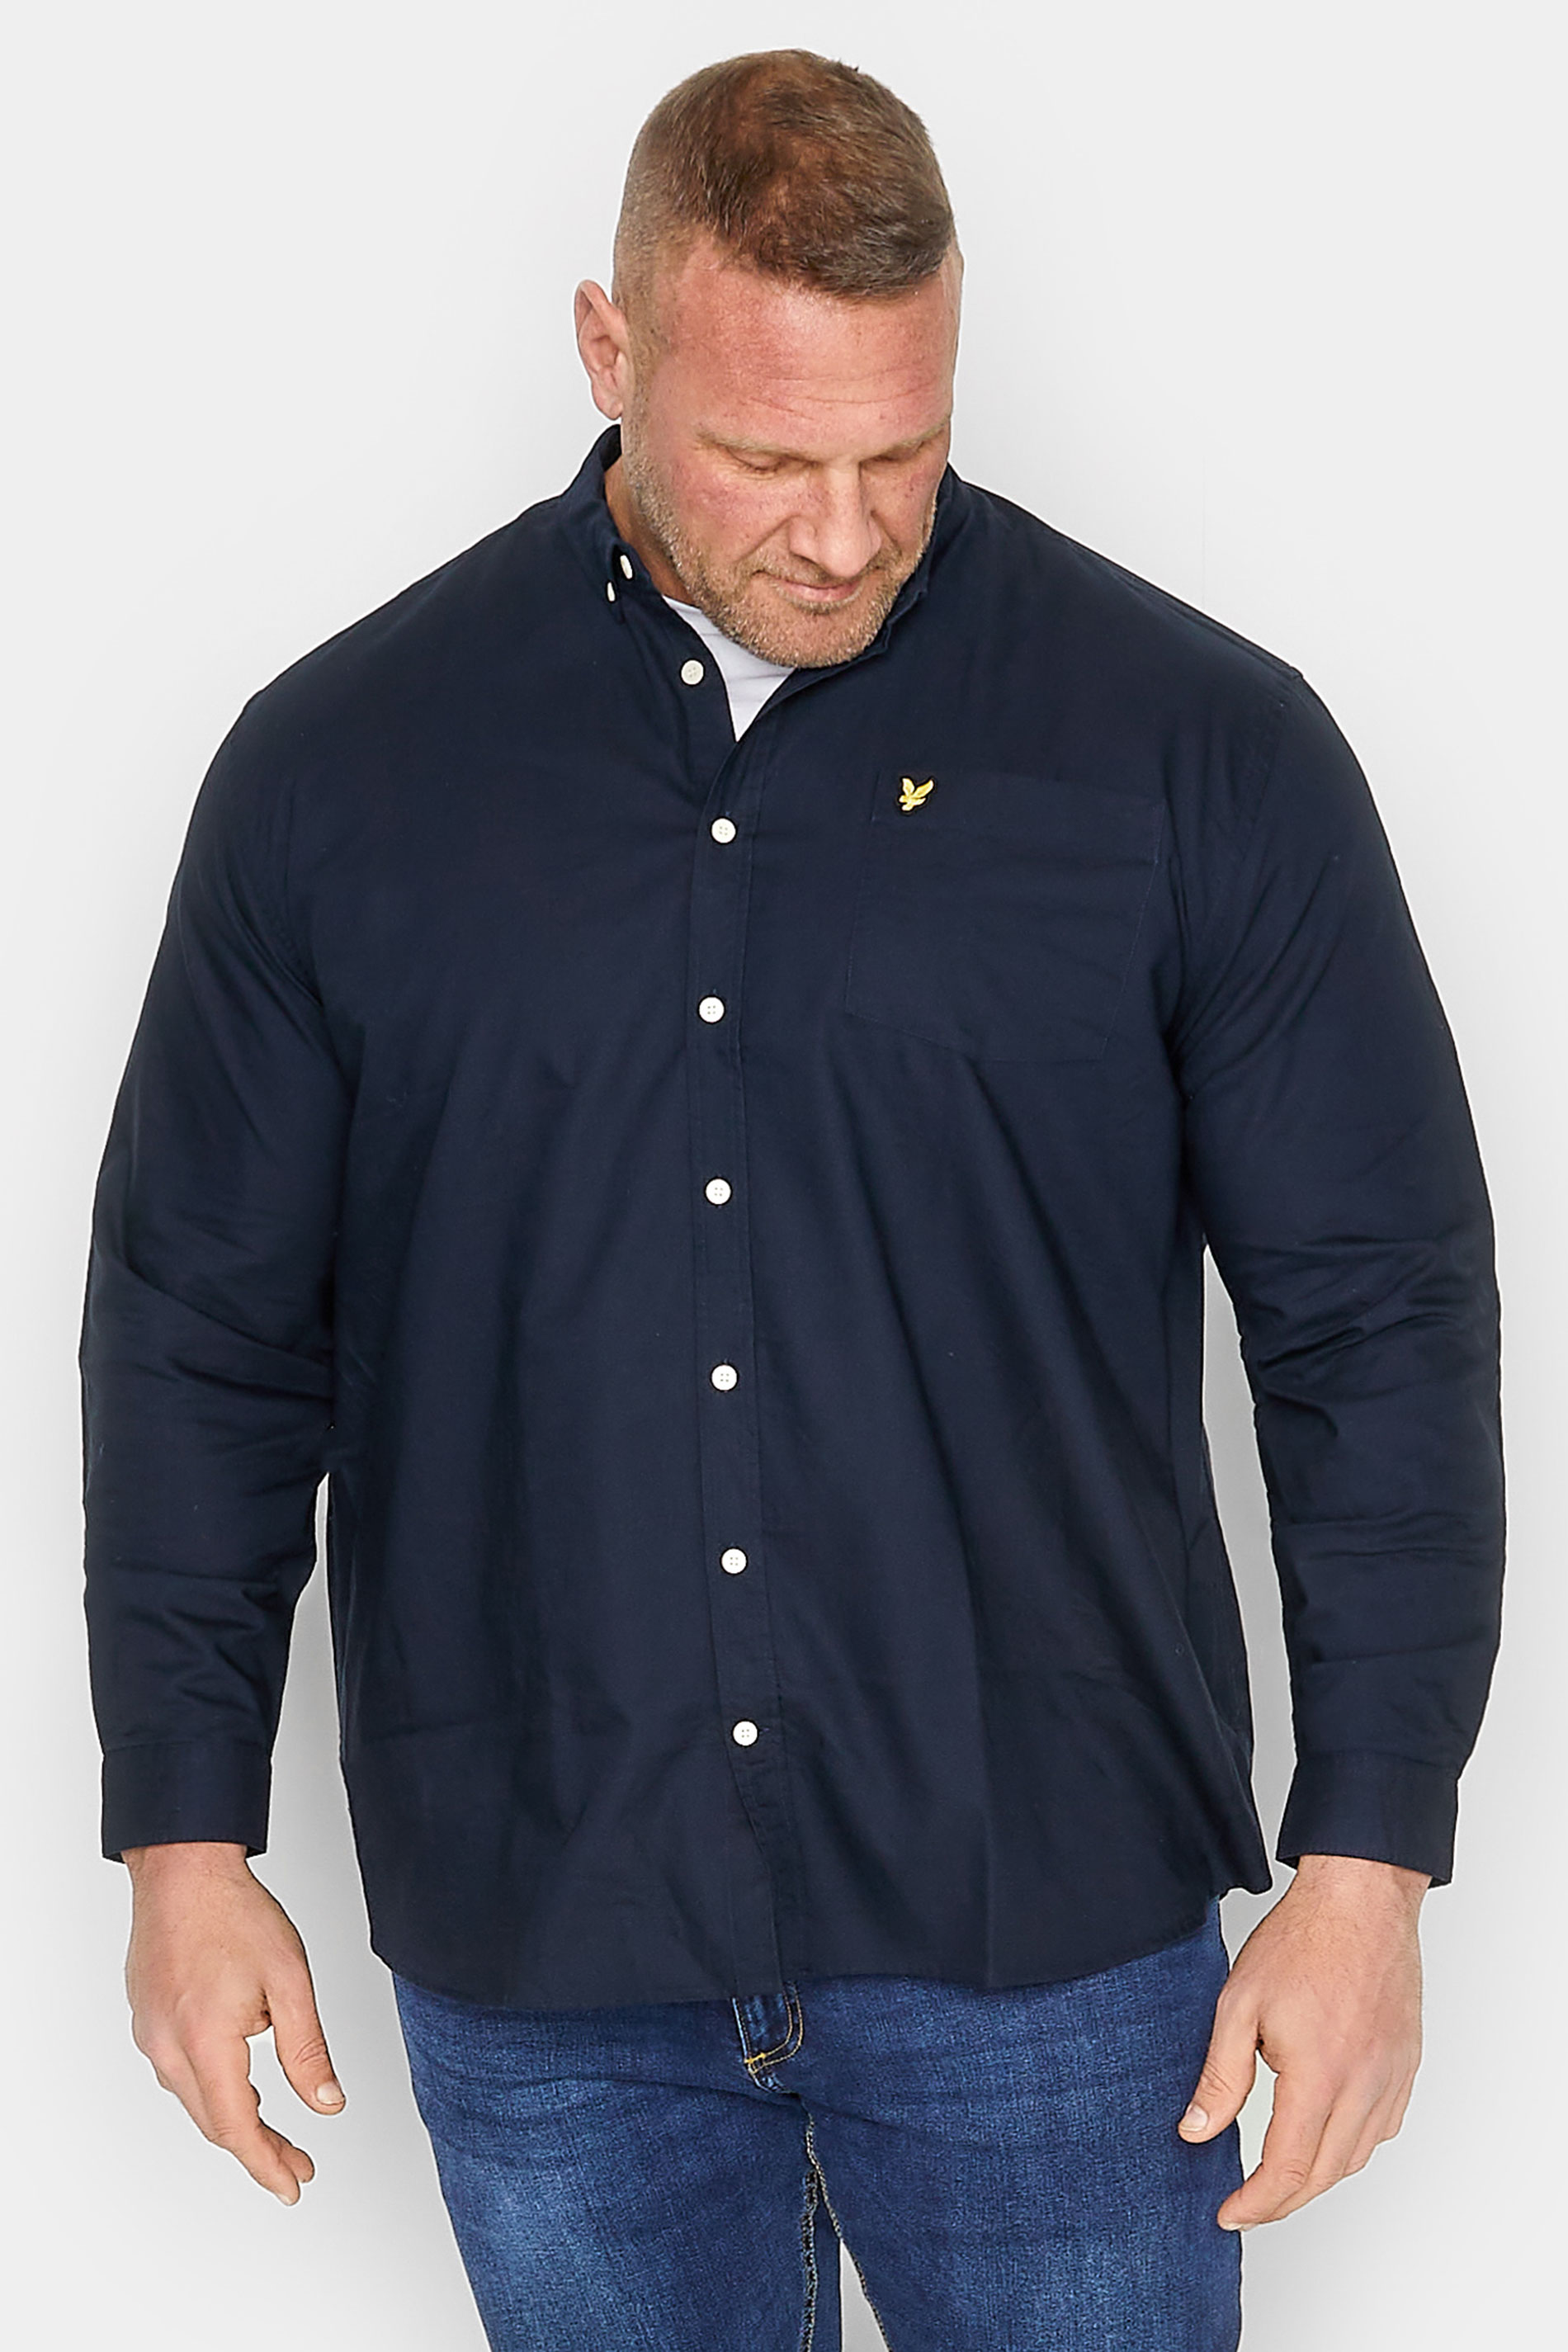 LYLE & SCOTT Big & Tall Navy Blue Oxford Shirt | BadRhino 1